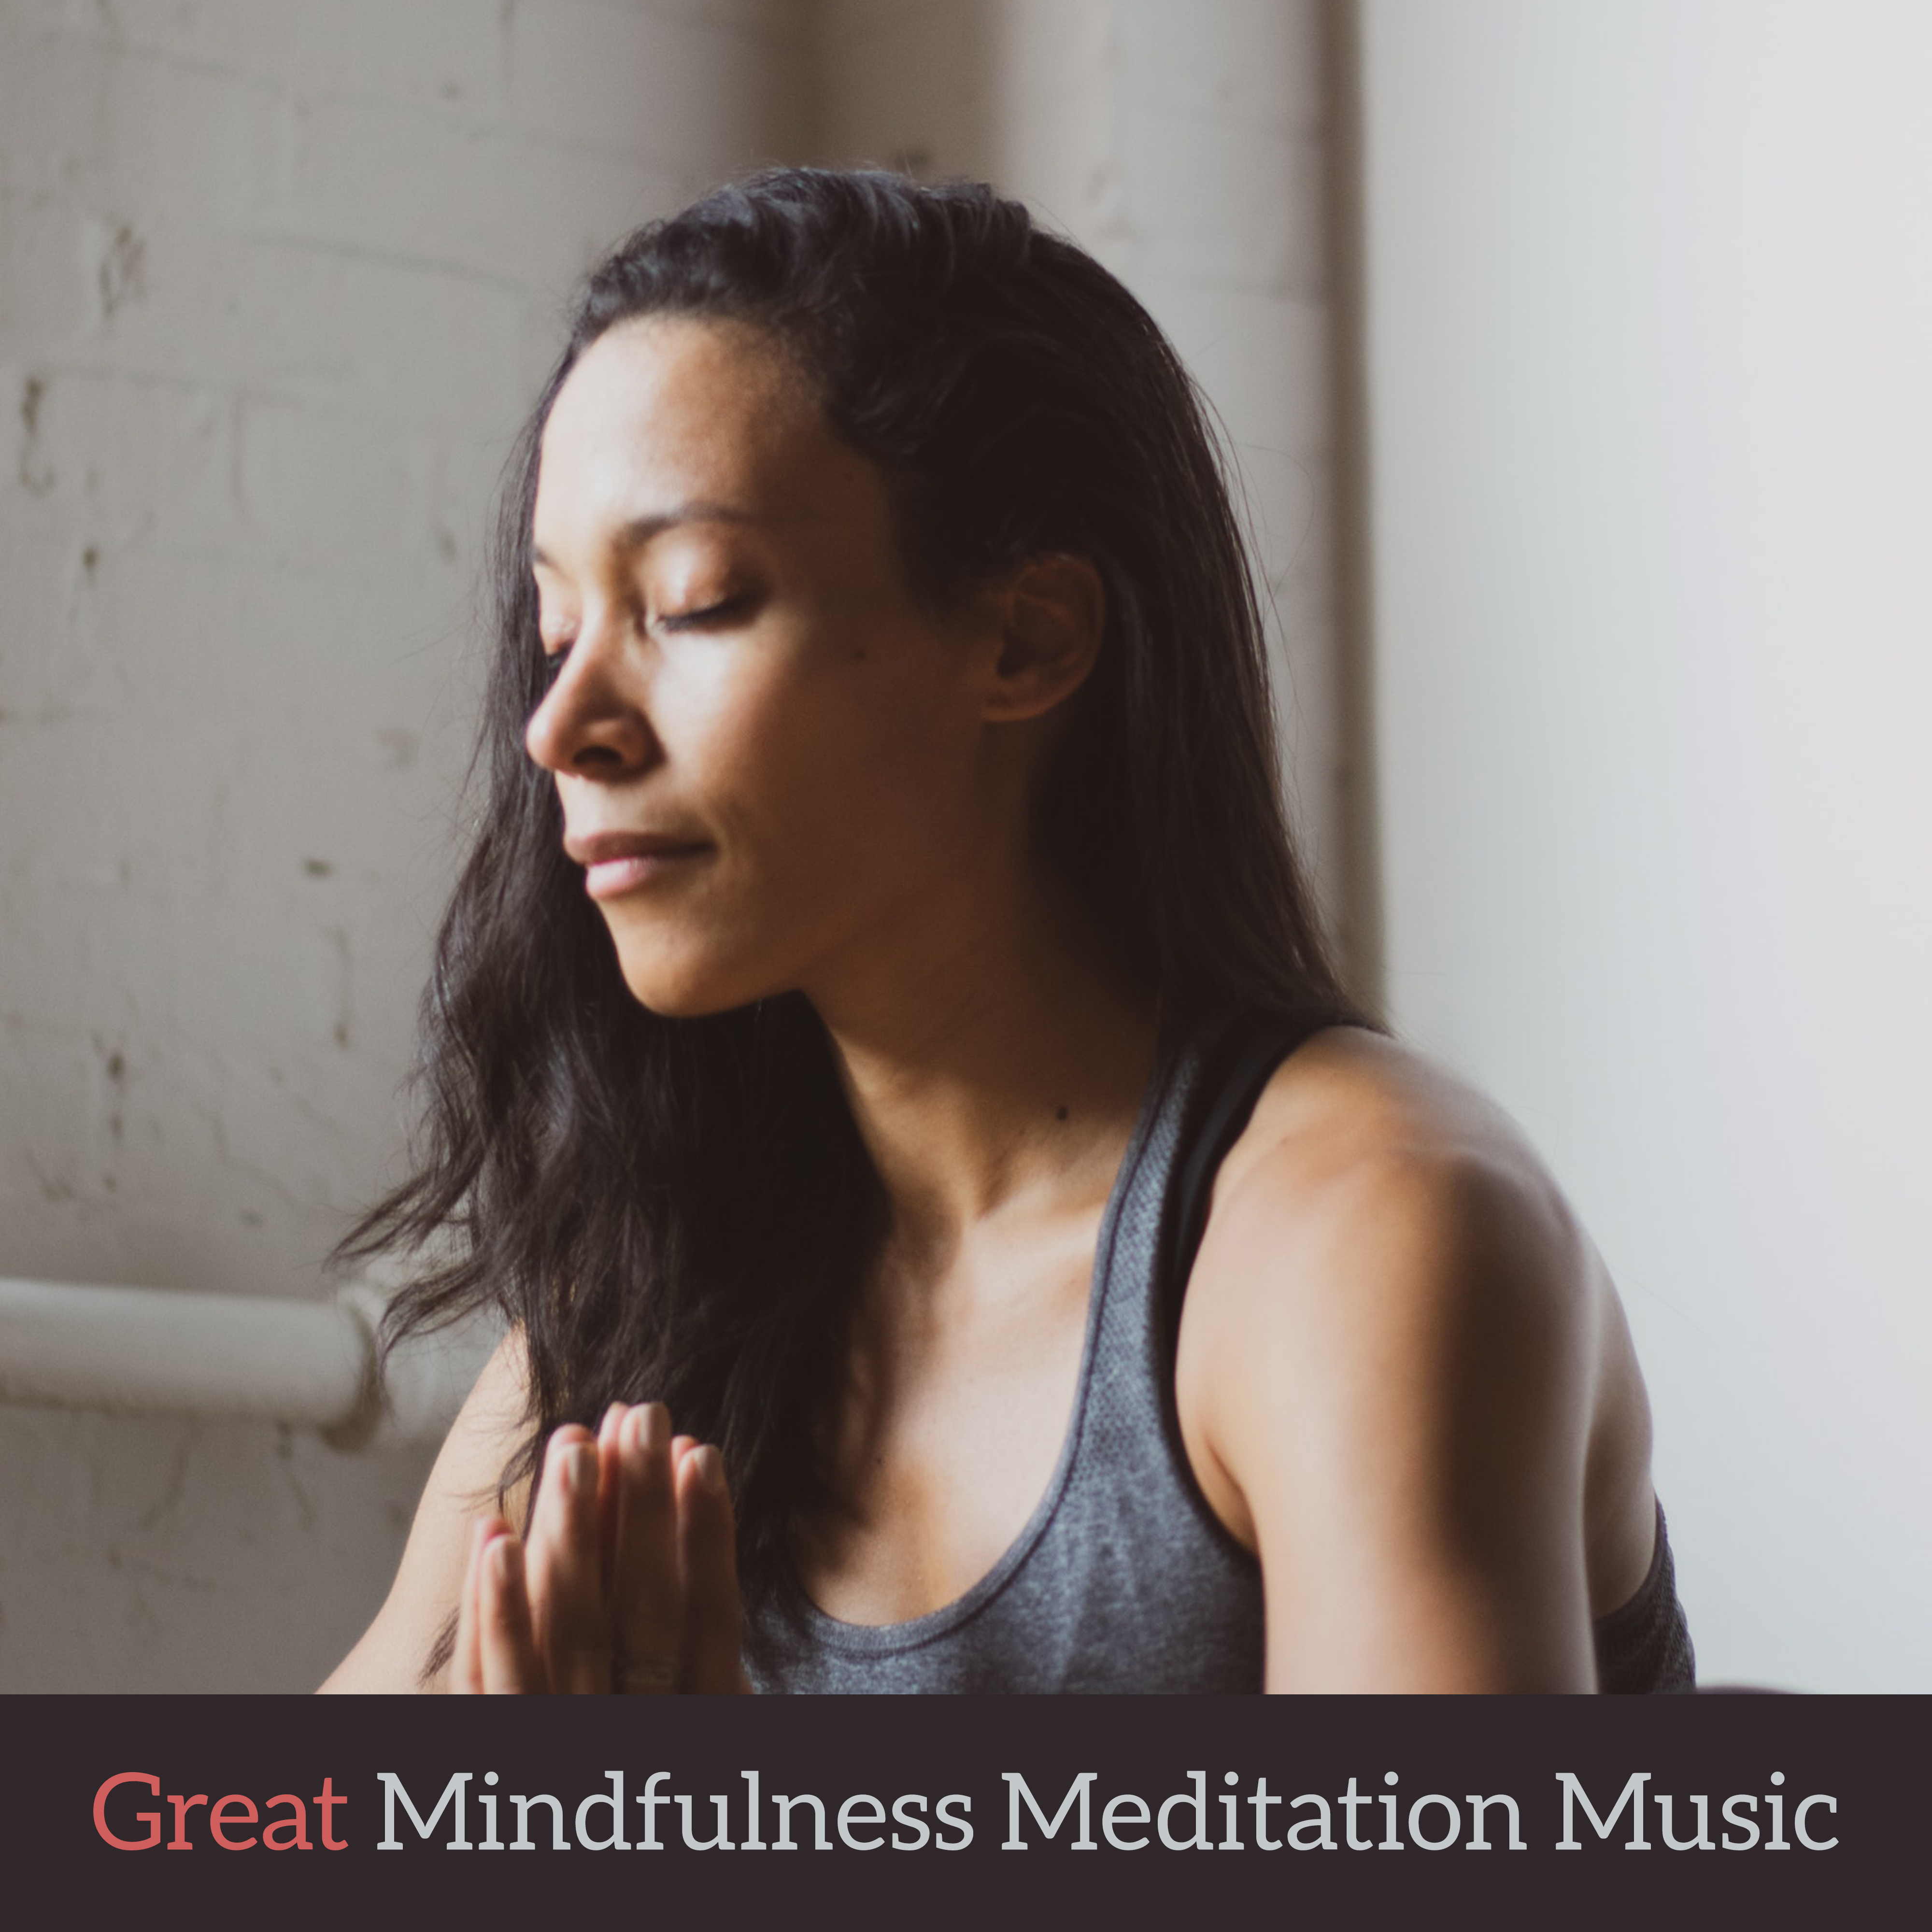 Great Mindfulness Meditation Music – Yoga Training & Relaxing Tracks